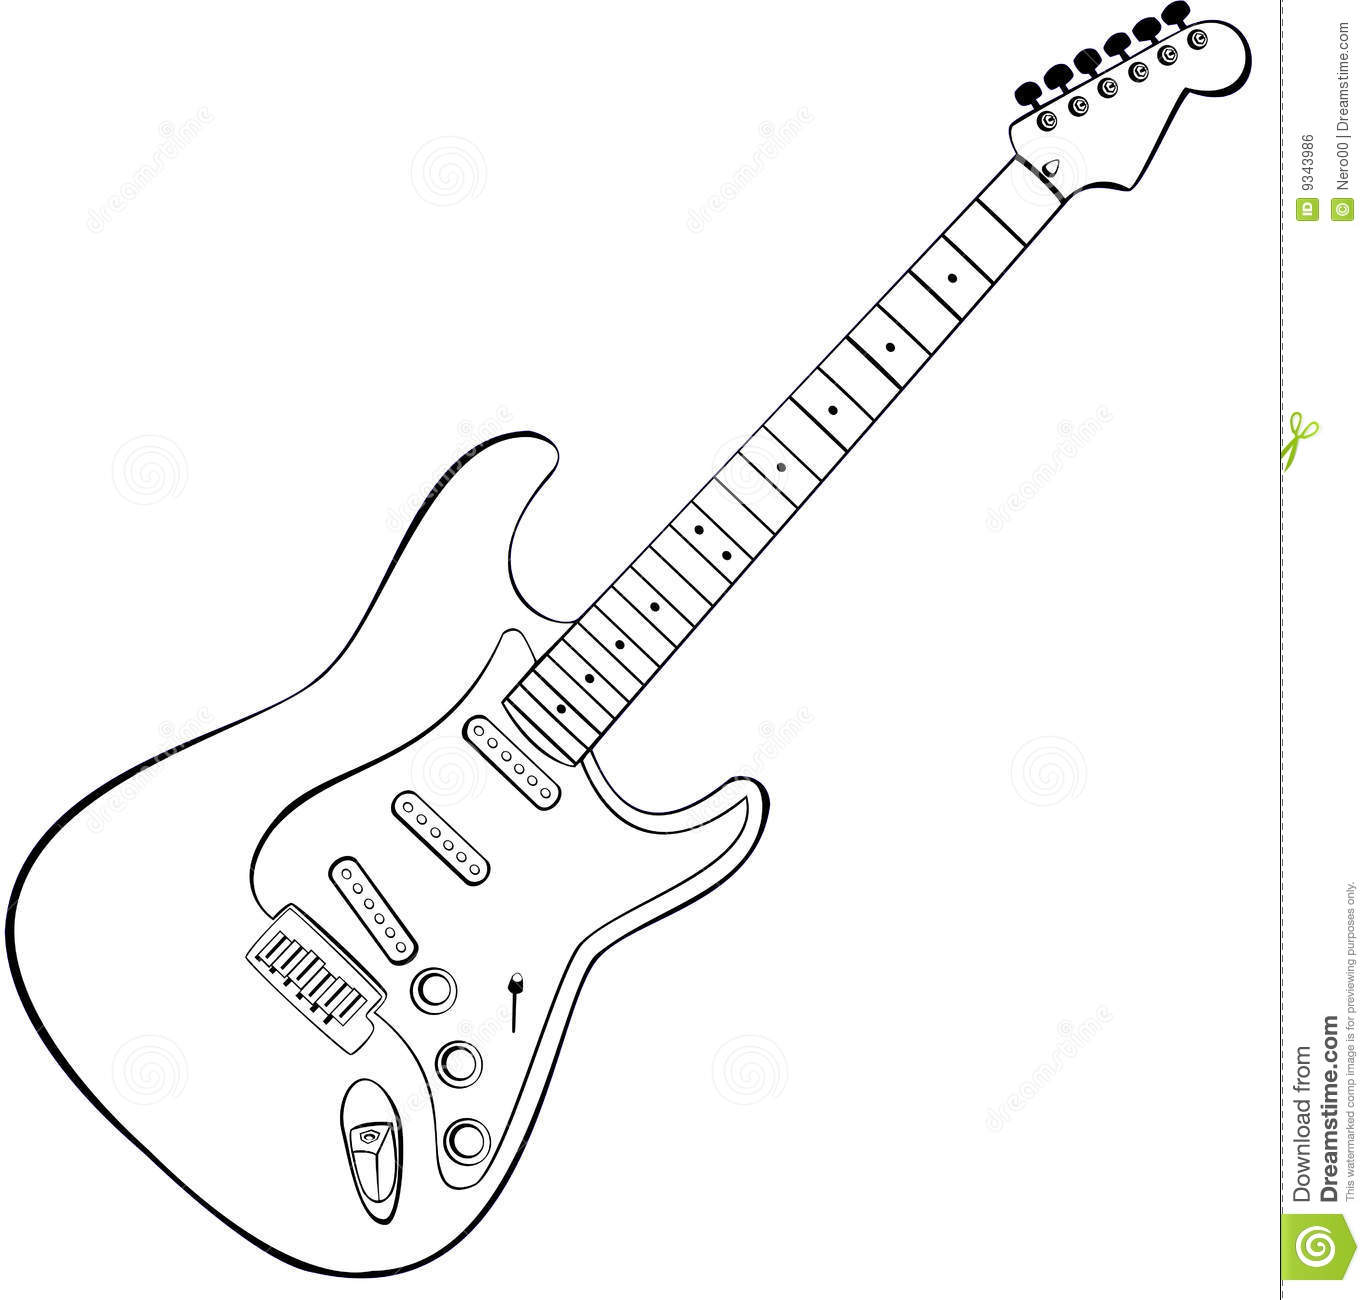 Rock Guitar Vector Royalty Free Stock Image   Image  9343986